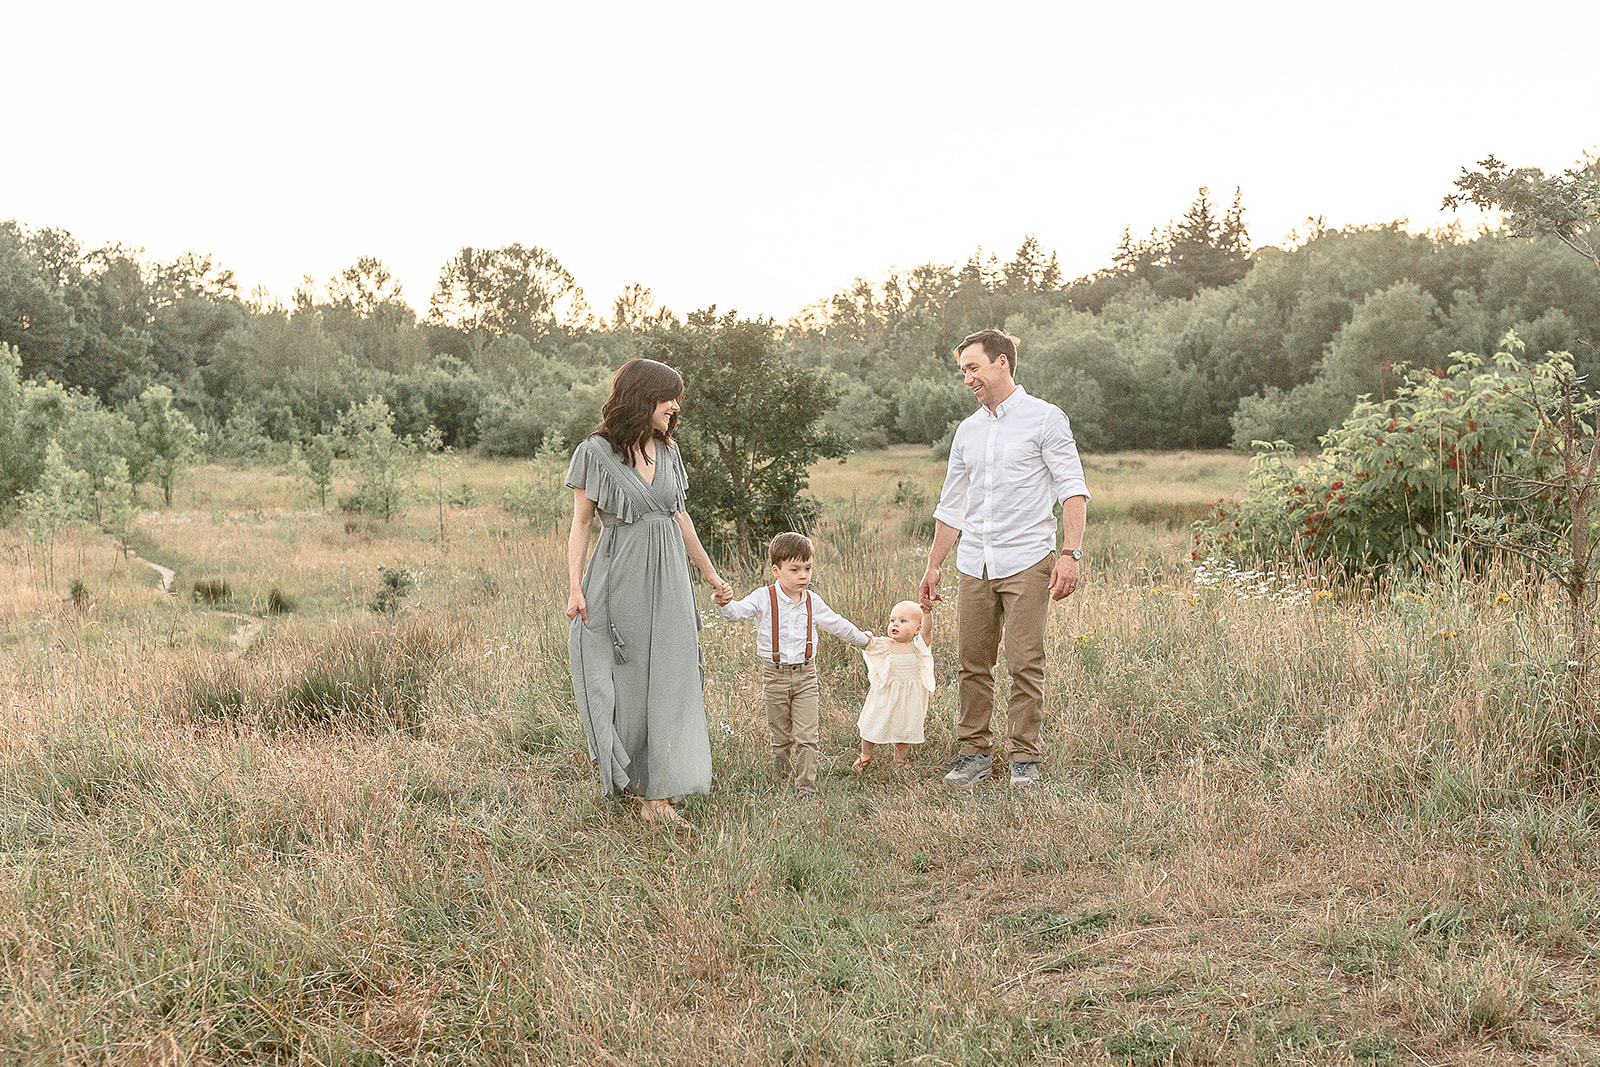 A family of four walk through a field of tall grass holding hands Portland Splash Pads